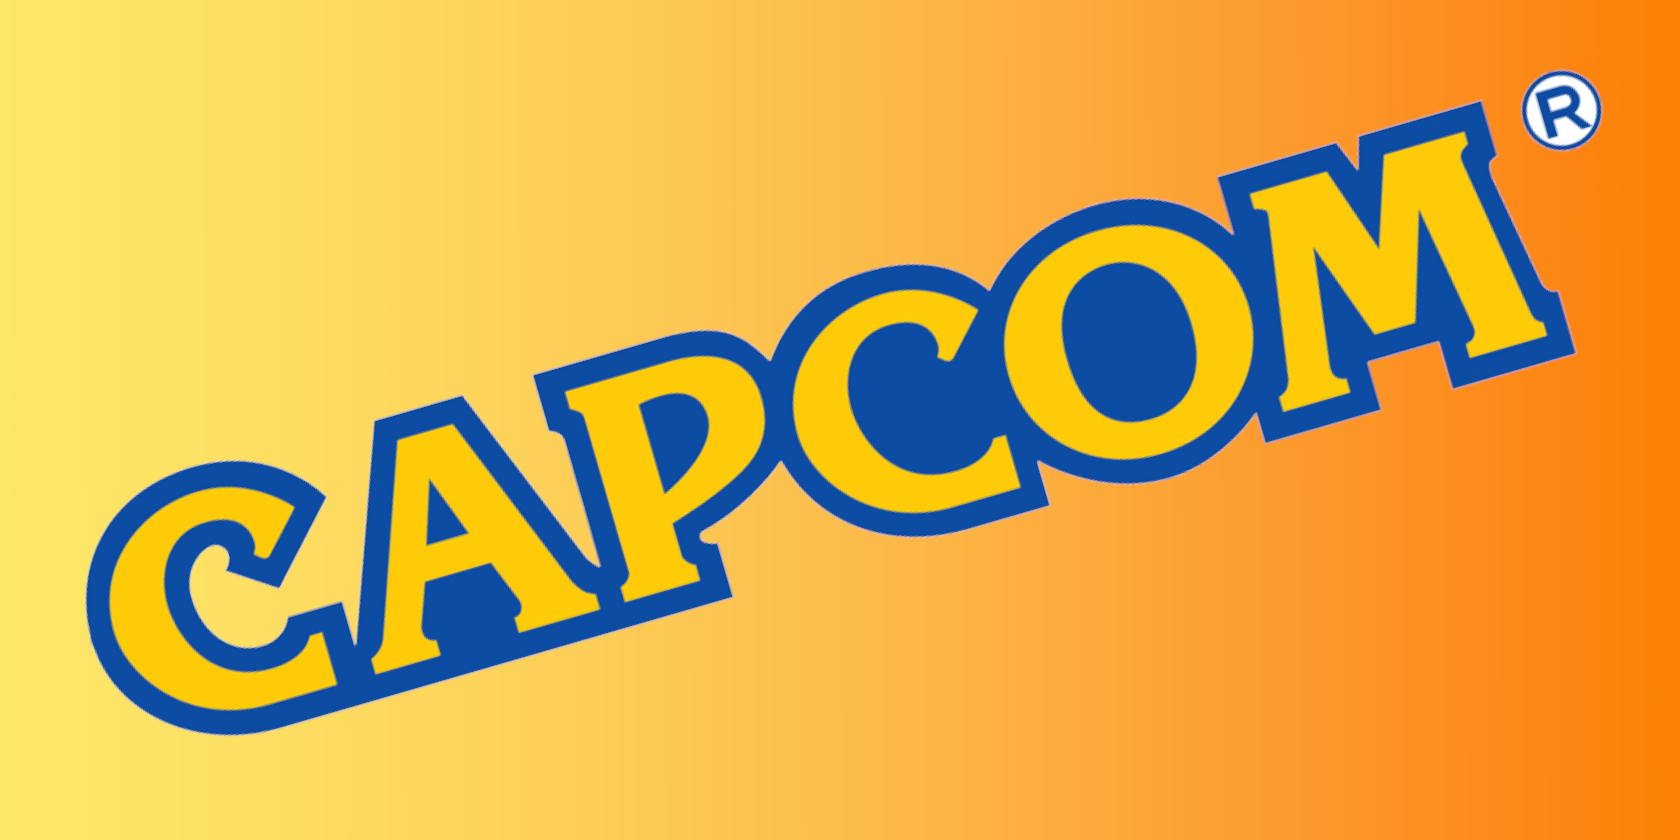 capcom logo on yellow background